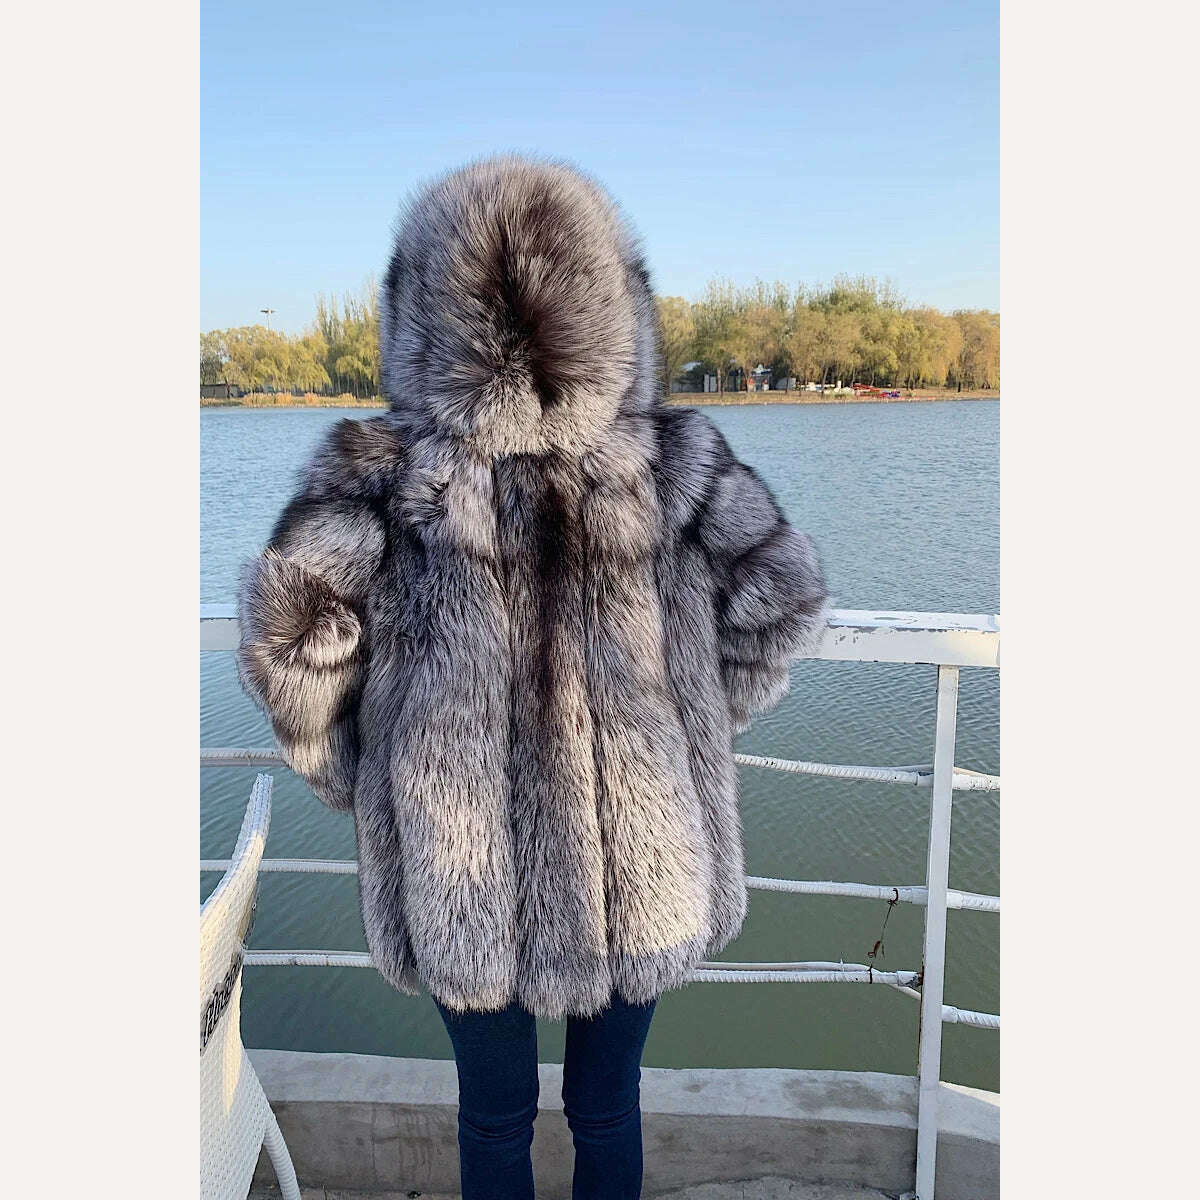 KIMLUD, 2021 New Luxury Silver Fox Fur Hooded Coats Women Winter Warm Outerwear High Quality Genuine Fox Fur Thick Fur Coat, KIMLUD Women's Clothes